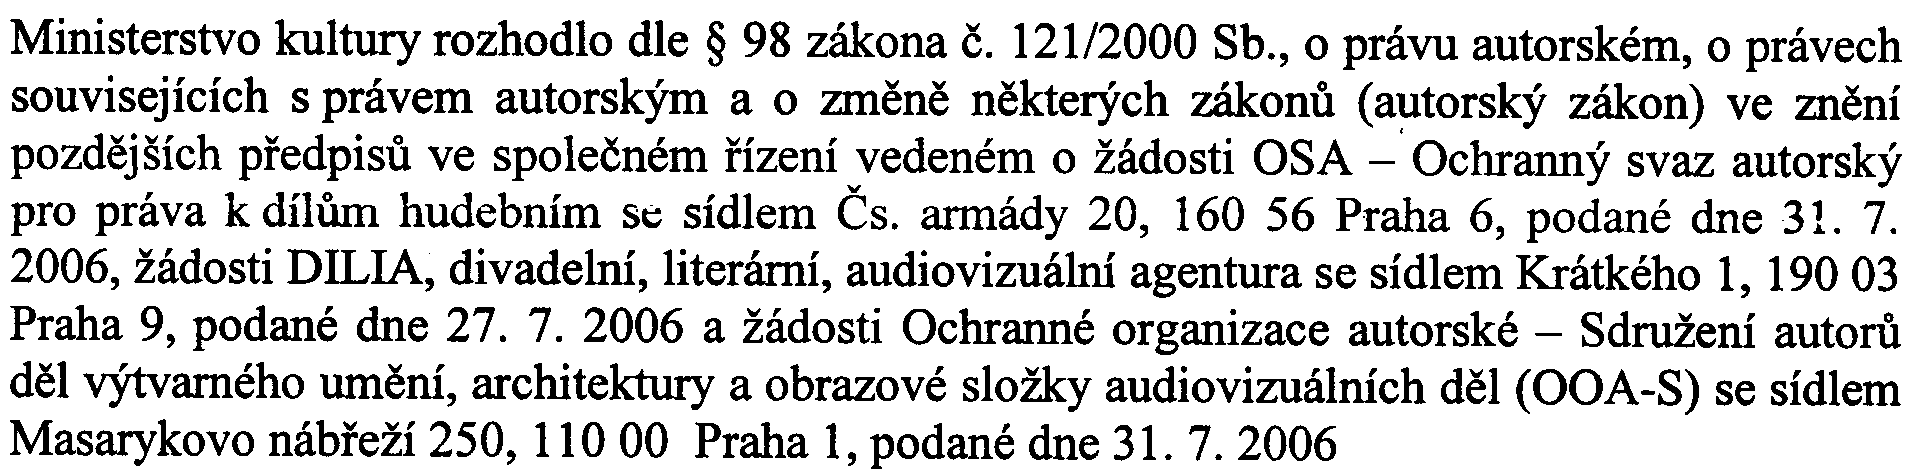 Masarykovo nabrezi 250, 110 00 Praha 1, podane dne 31. 7. 2006 t a k t 0: I. 1. Ministerstvo kultury udeluje die 98 odst.